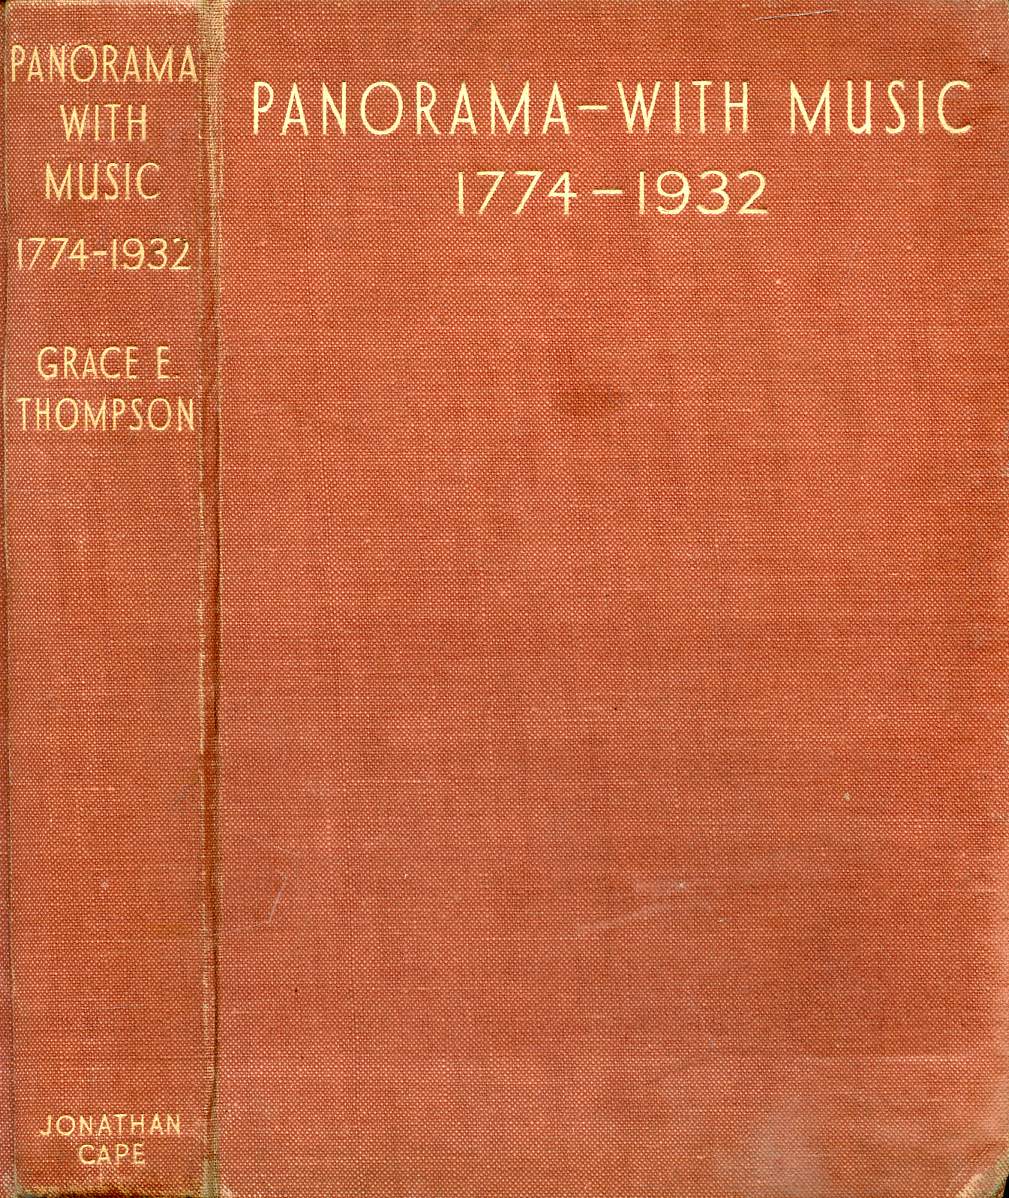 PANORAMA WITH MUSIC, 1774-1932